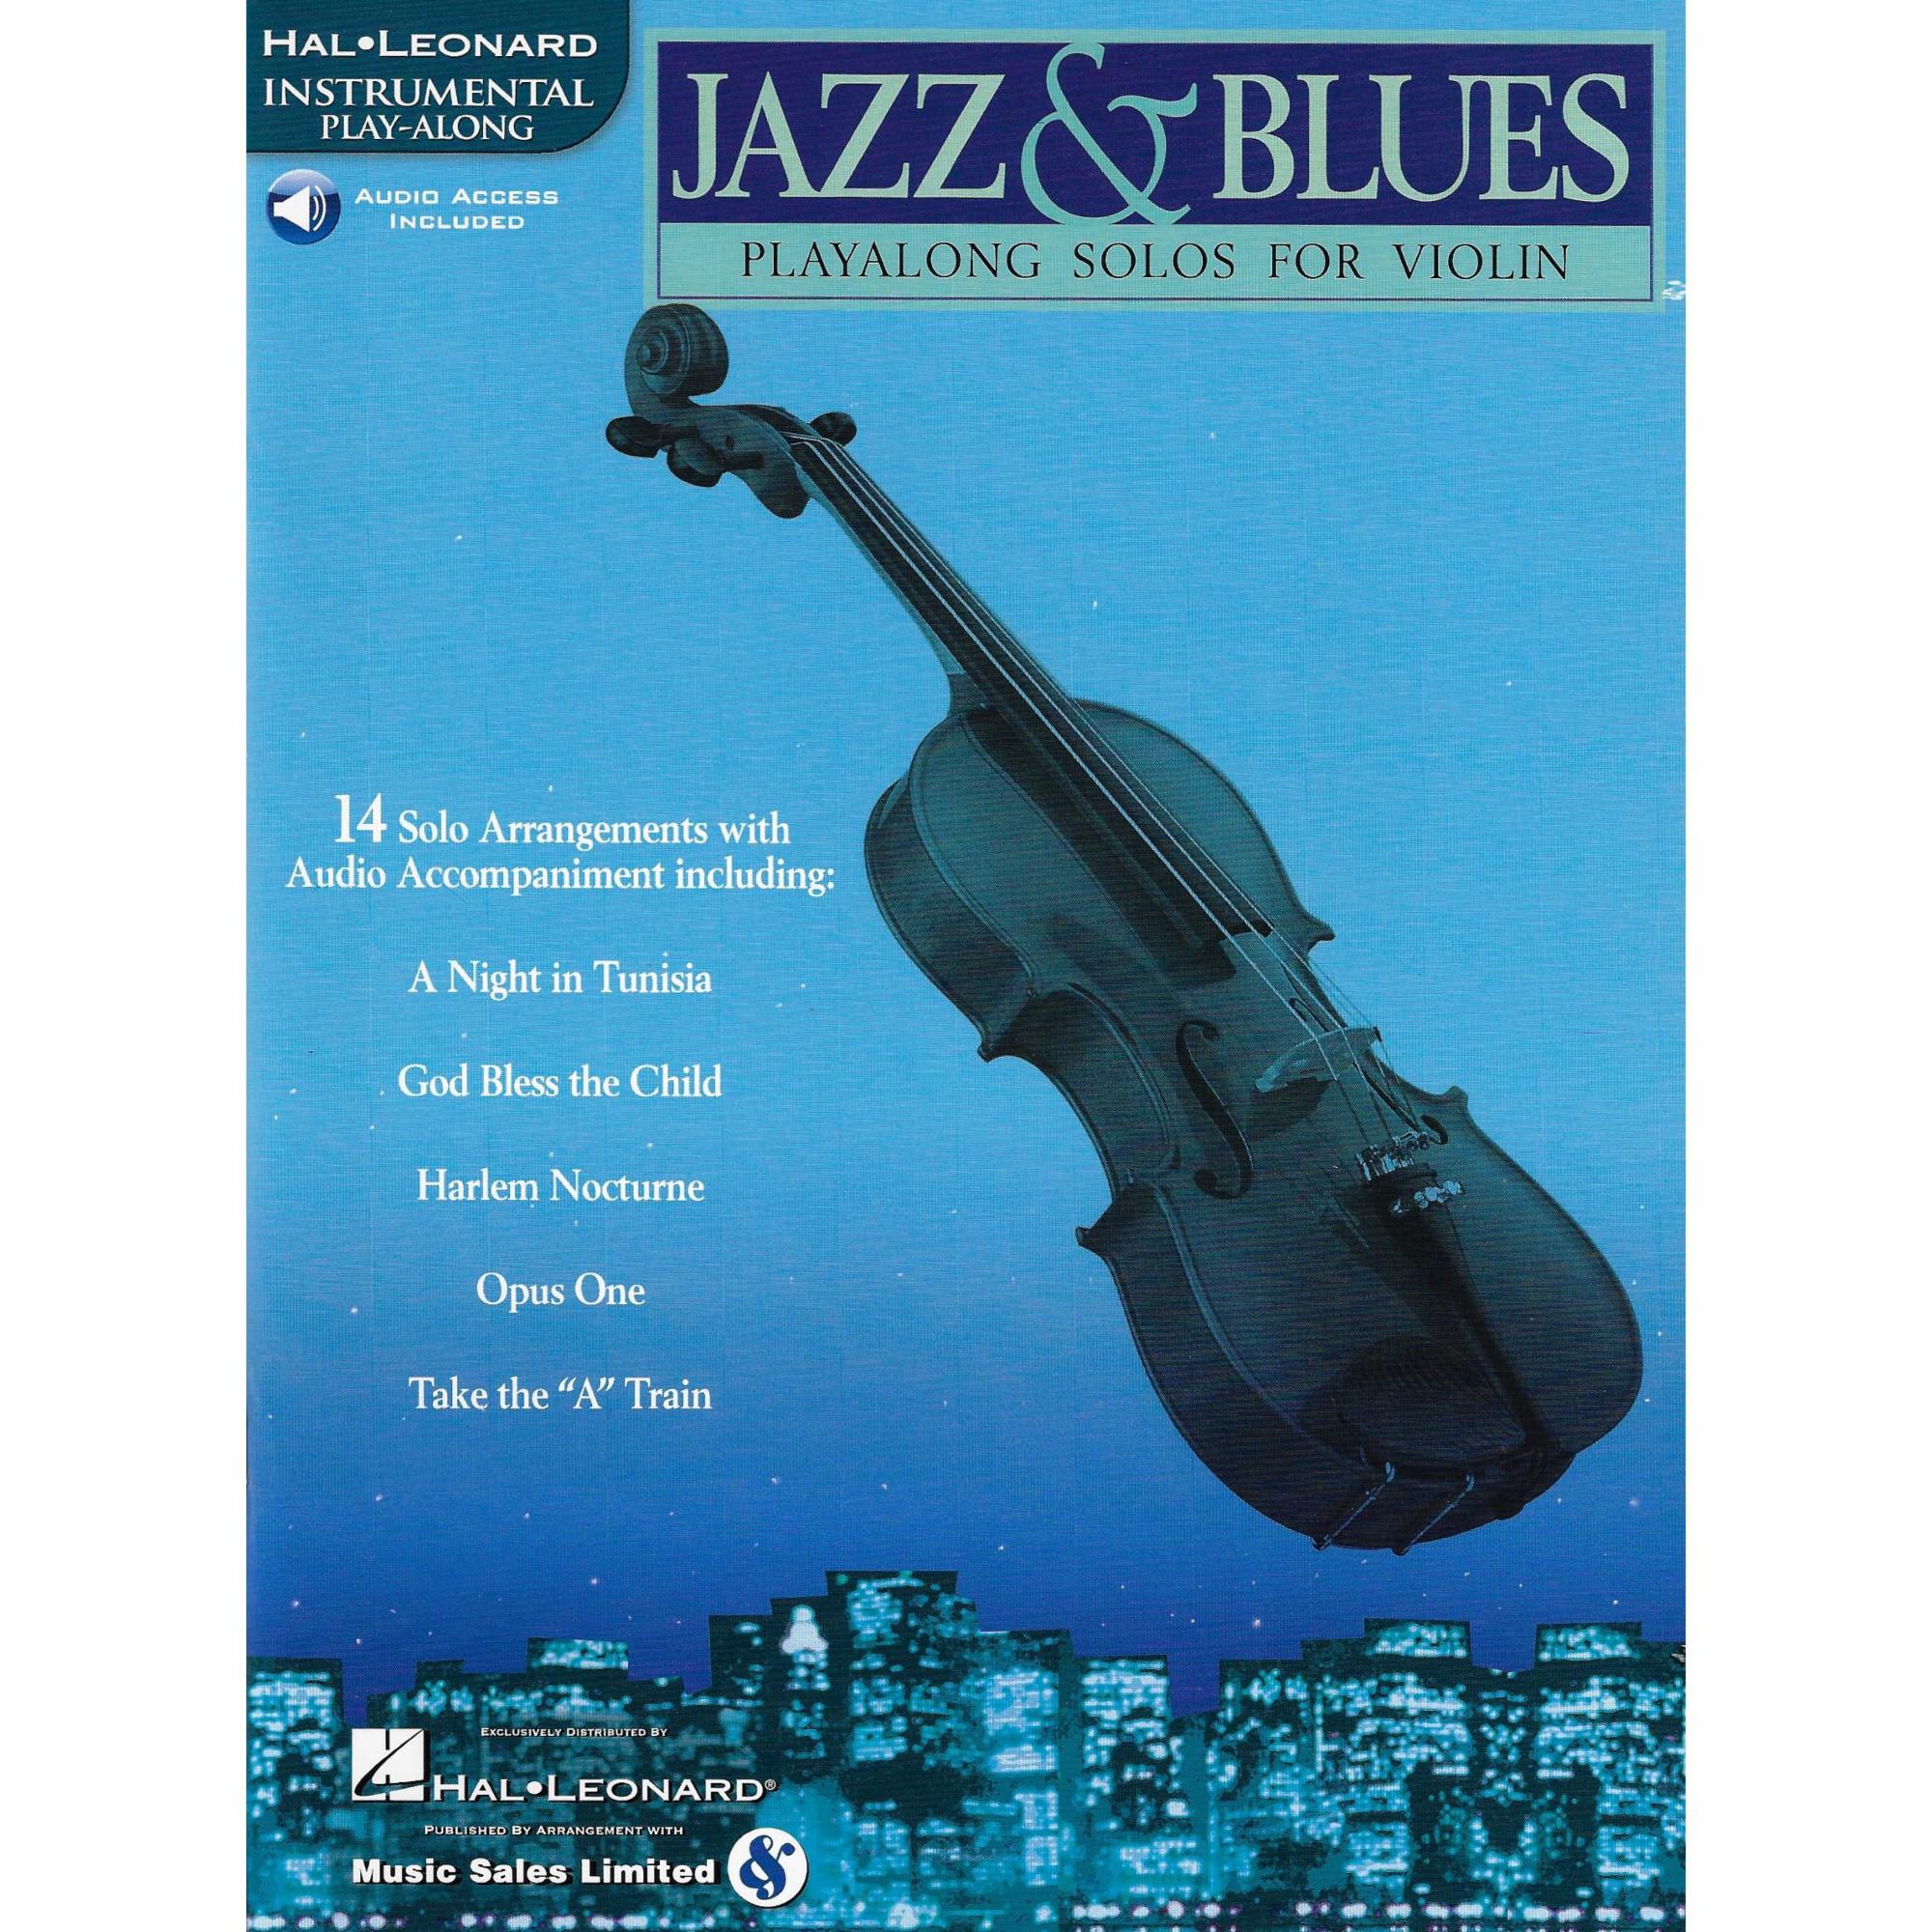 Jazz & Blues for Violin